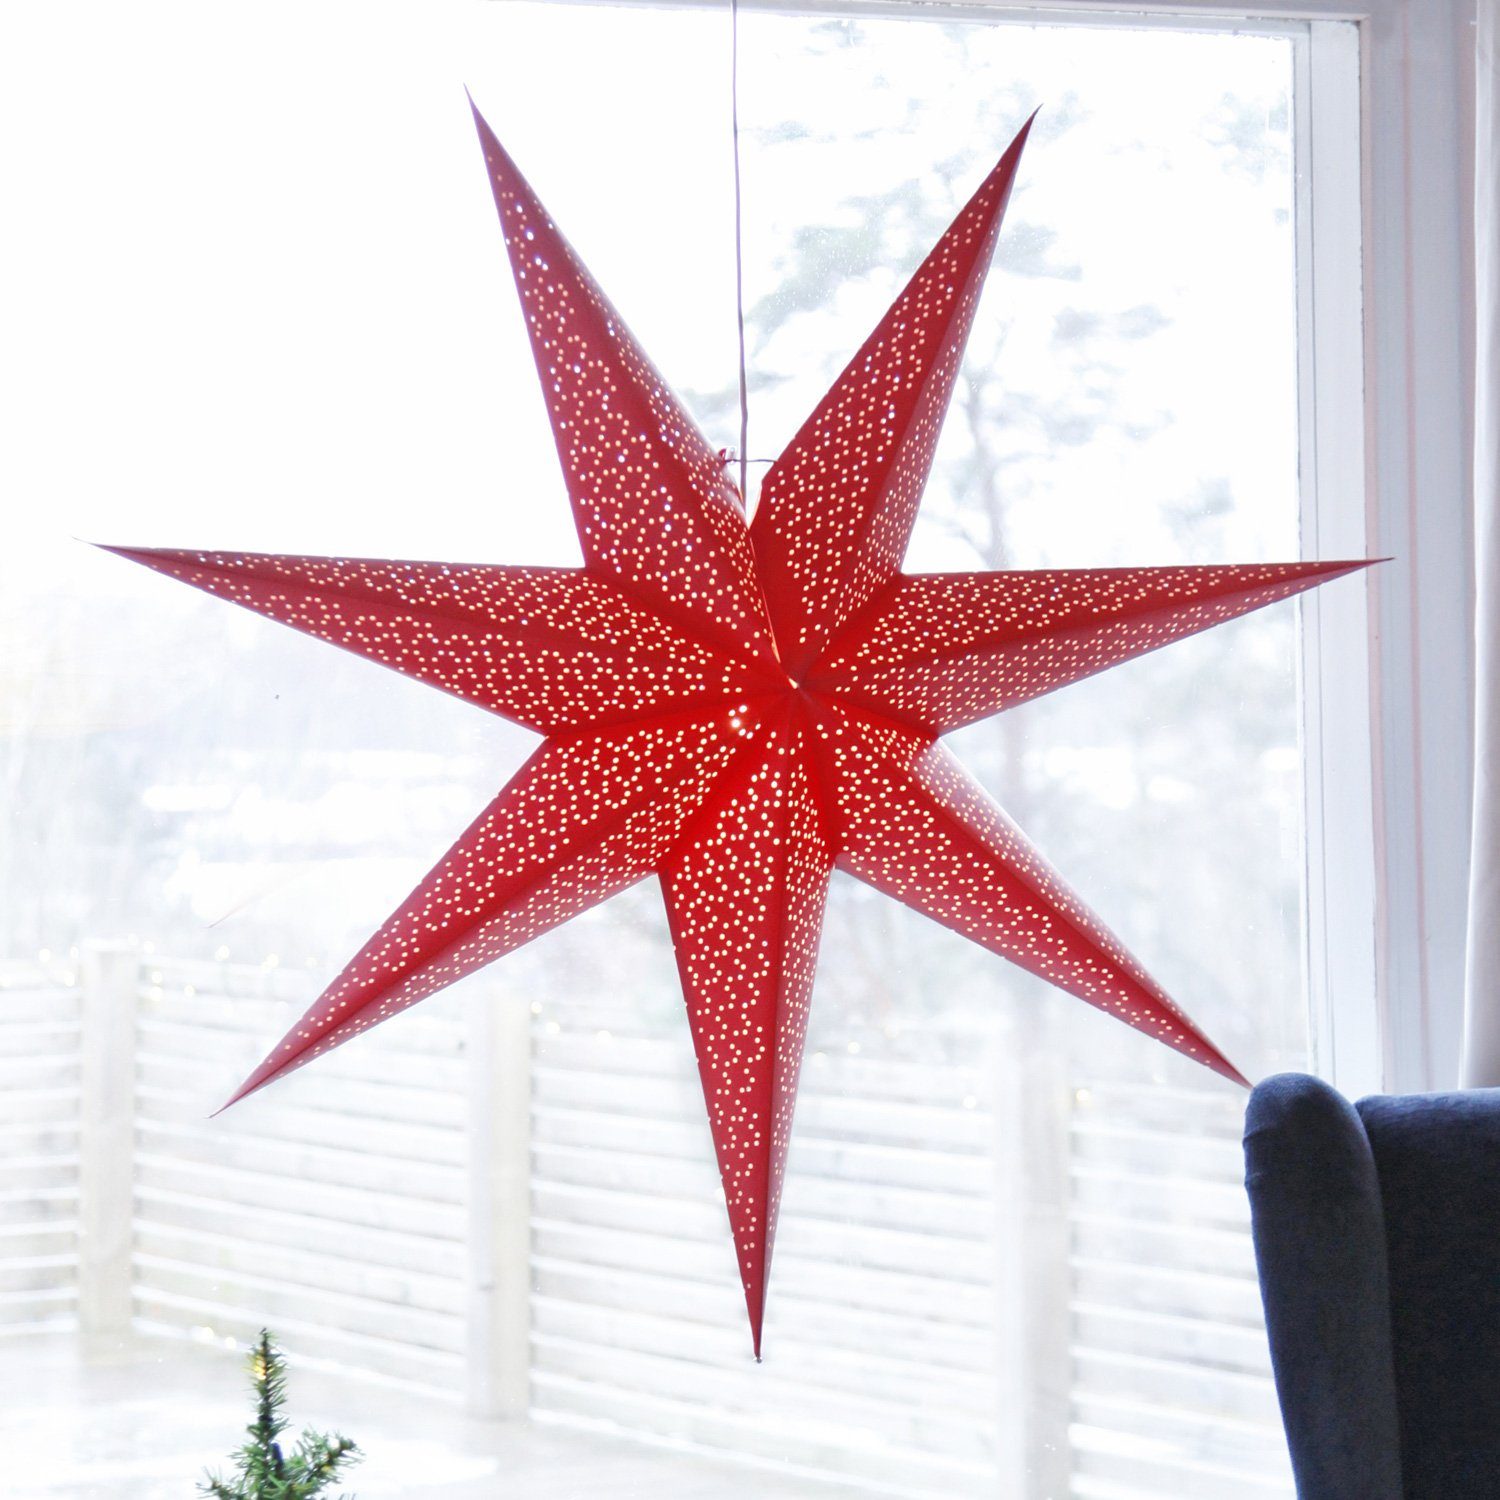 rot mit 7zackig TRADING Faltstern Papierstern STAR Leuchtstern hängend 100cm Kabel LED Stern